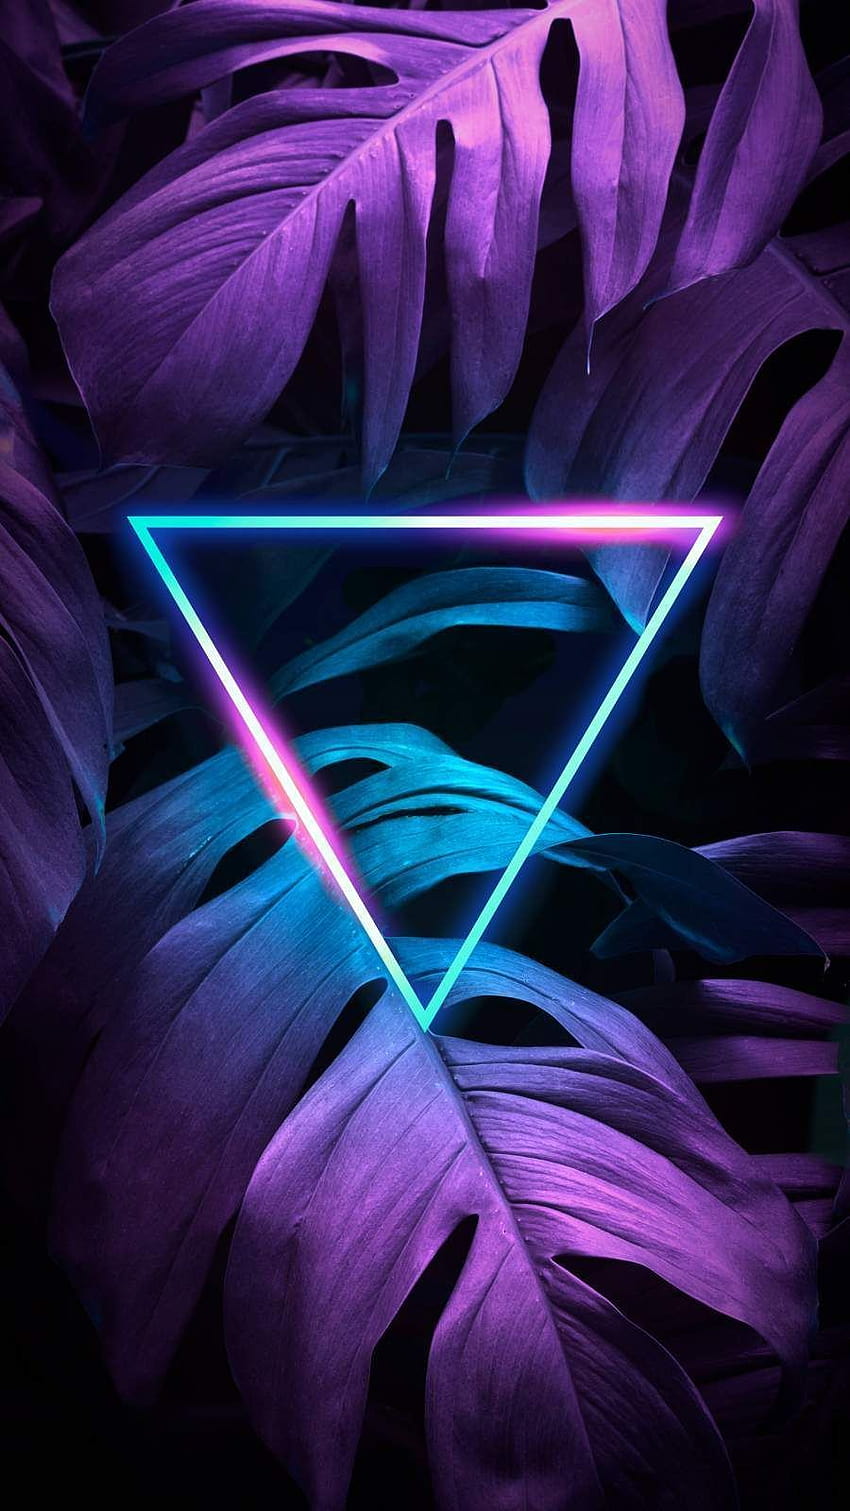 Triángulo de neón, luces de neón triangulares de colores. fondo de pantalla del teléfono